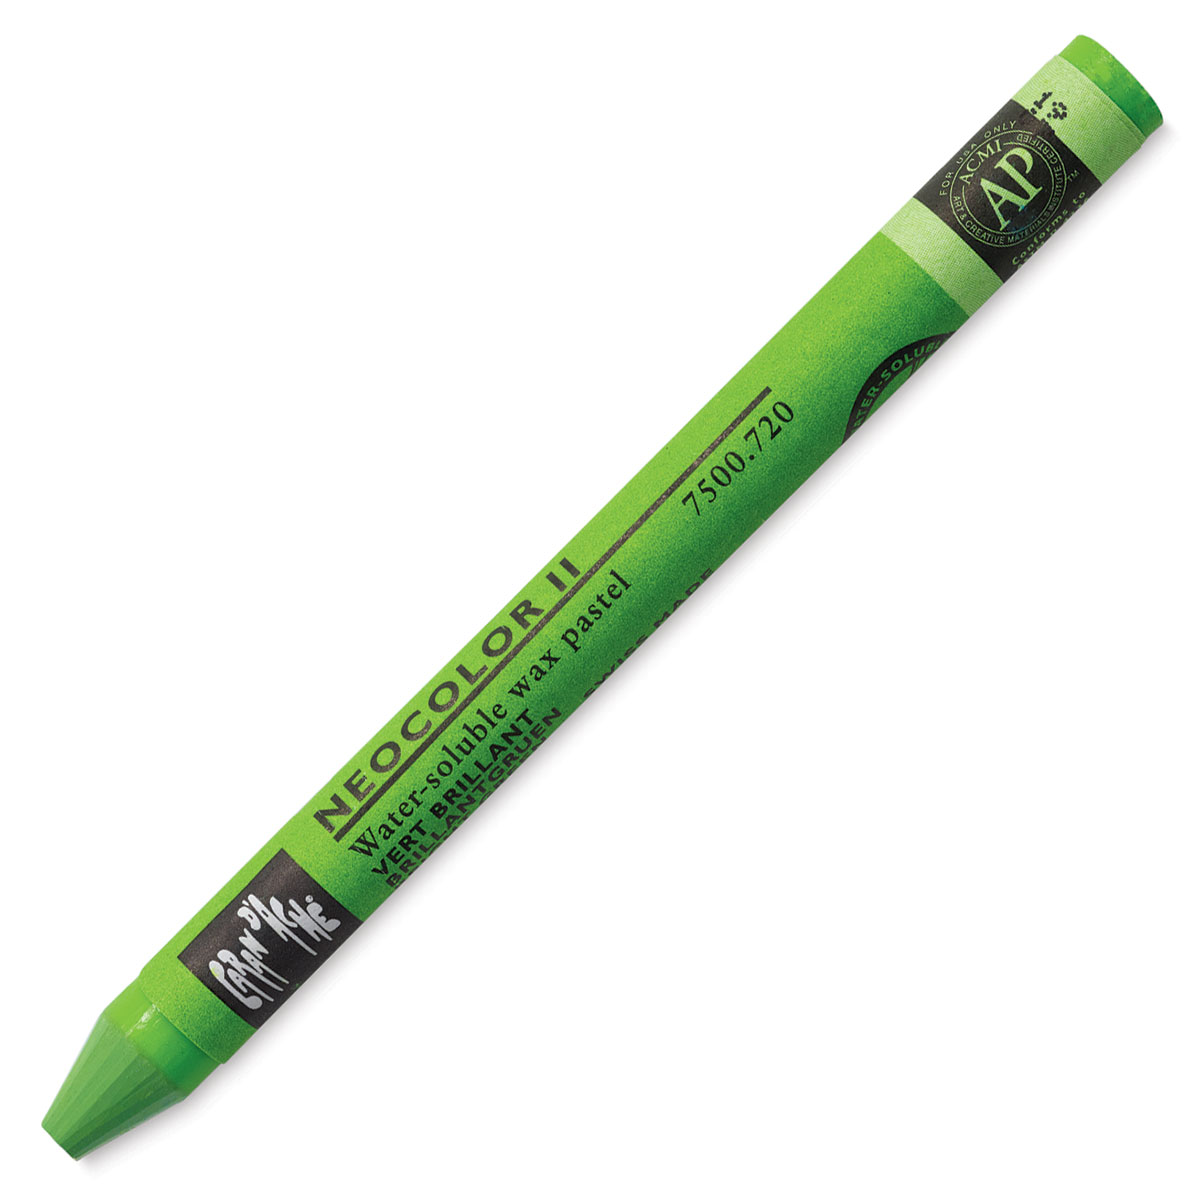 Caran d'Ache Neocolor II Crayon - Bright Green (7500.72)